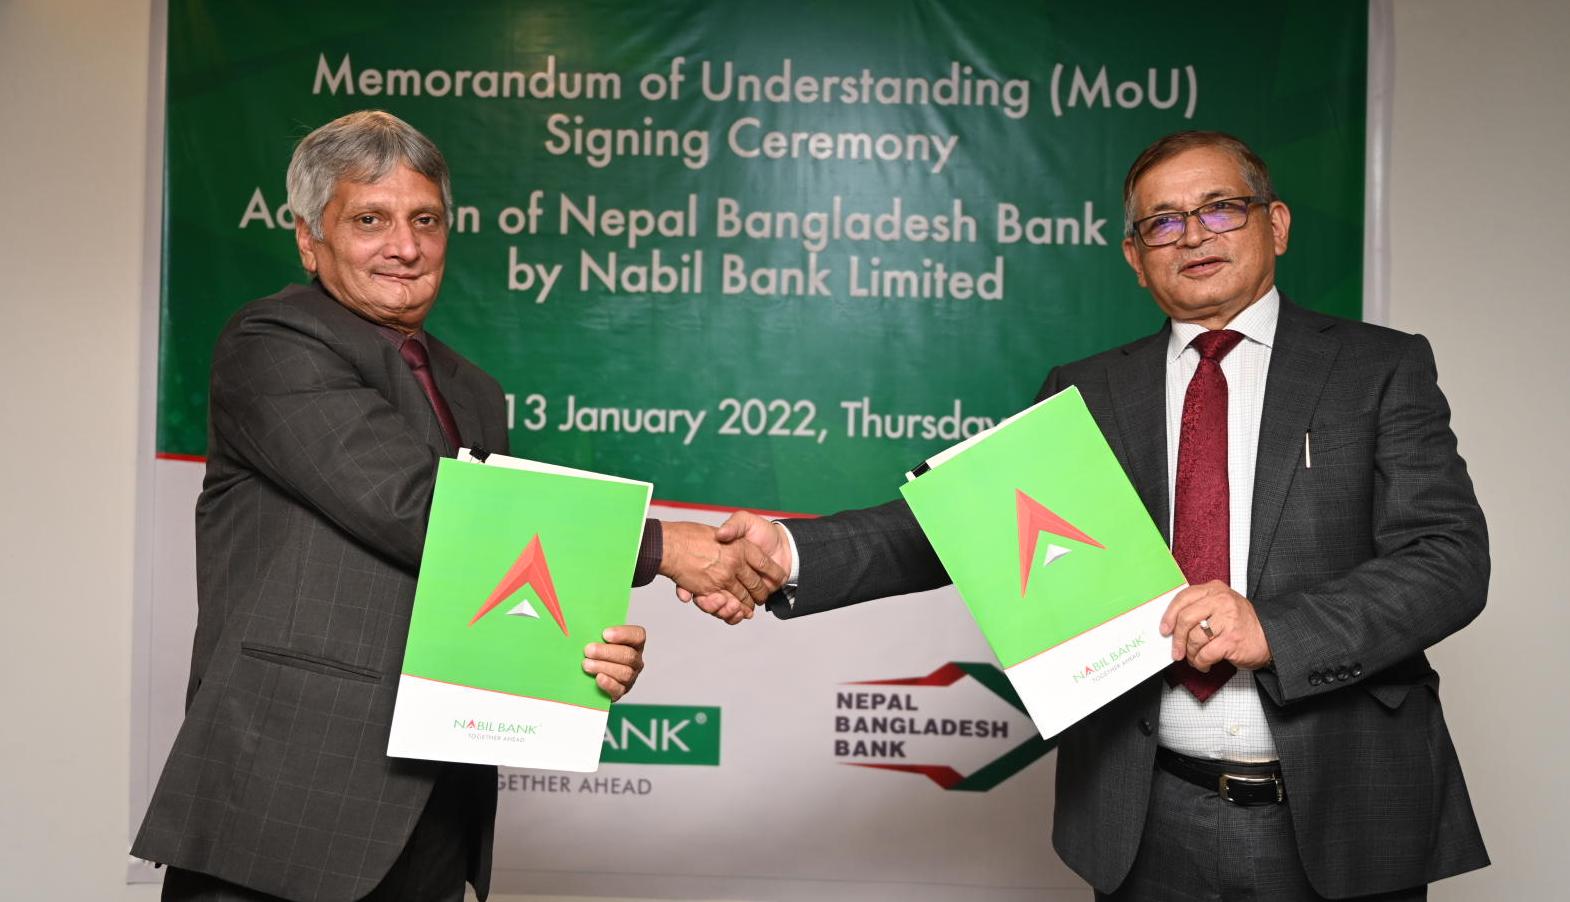 नबिलले नेपाल बंगलादेश बैंक किन्ने प्रारम्भिक सम्झौता